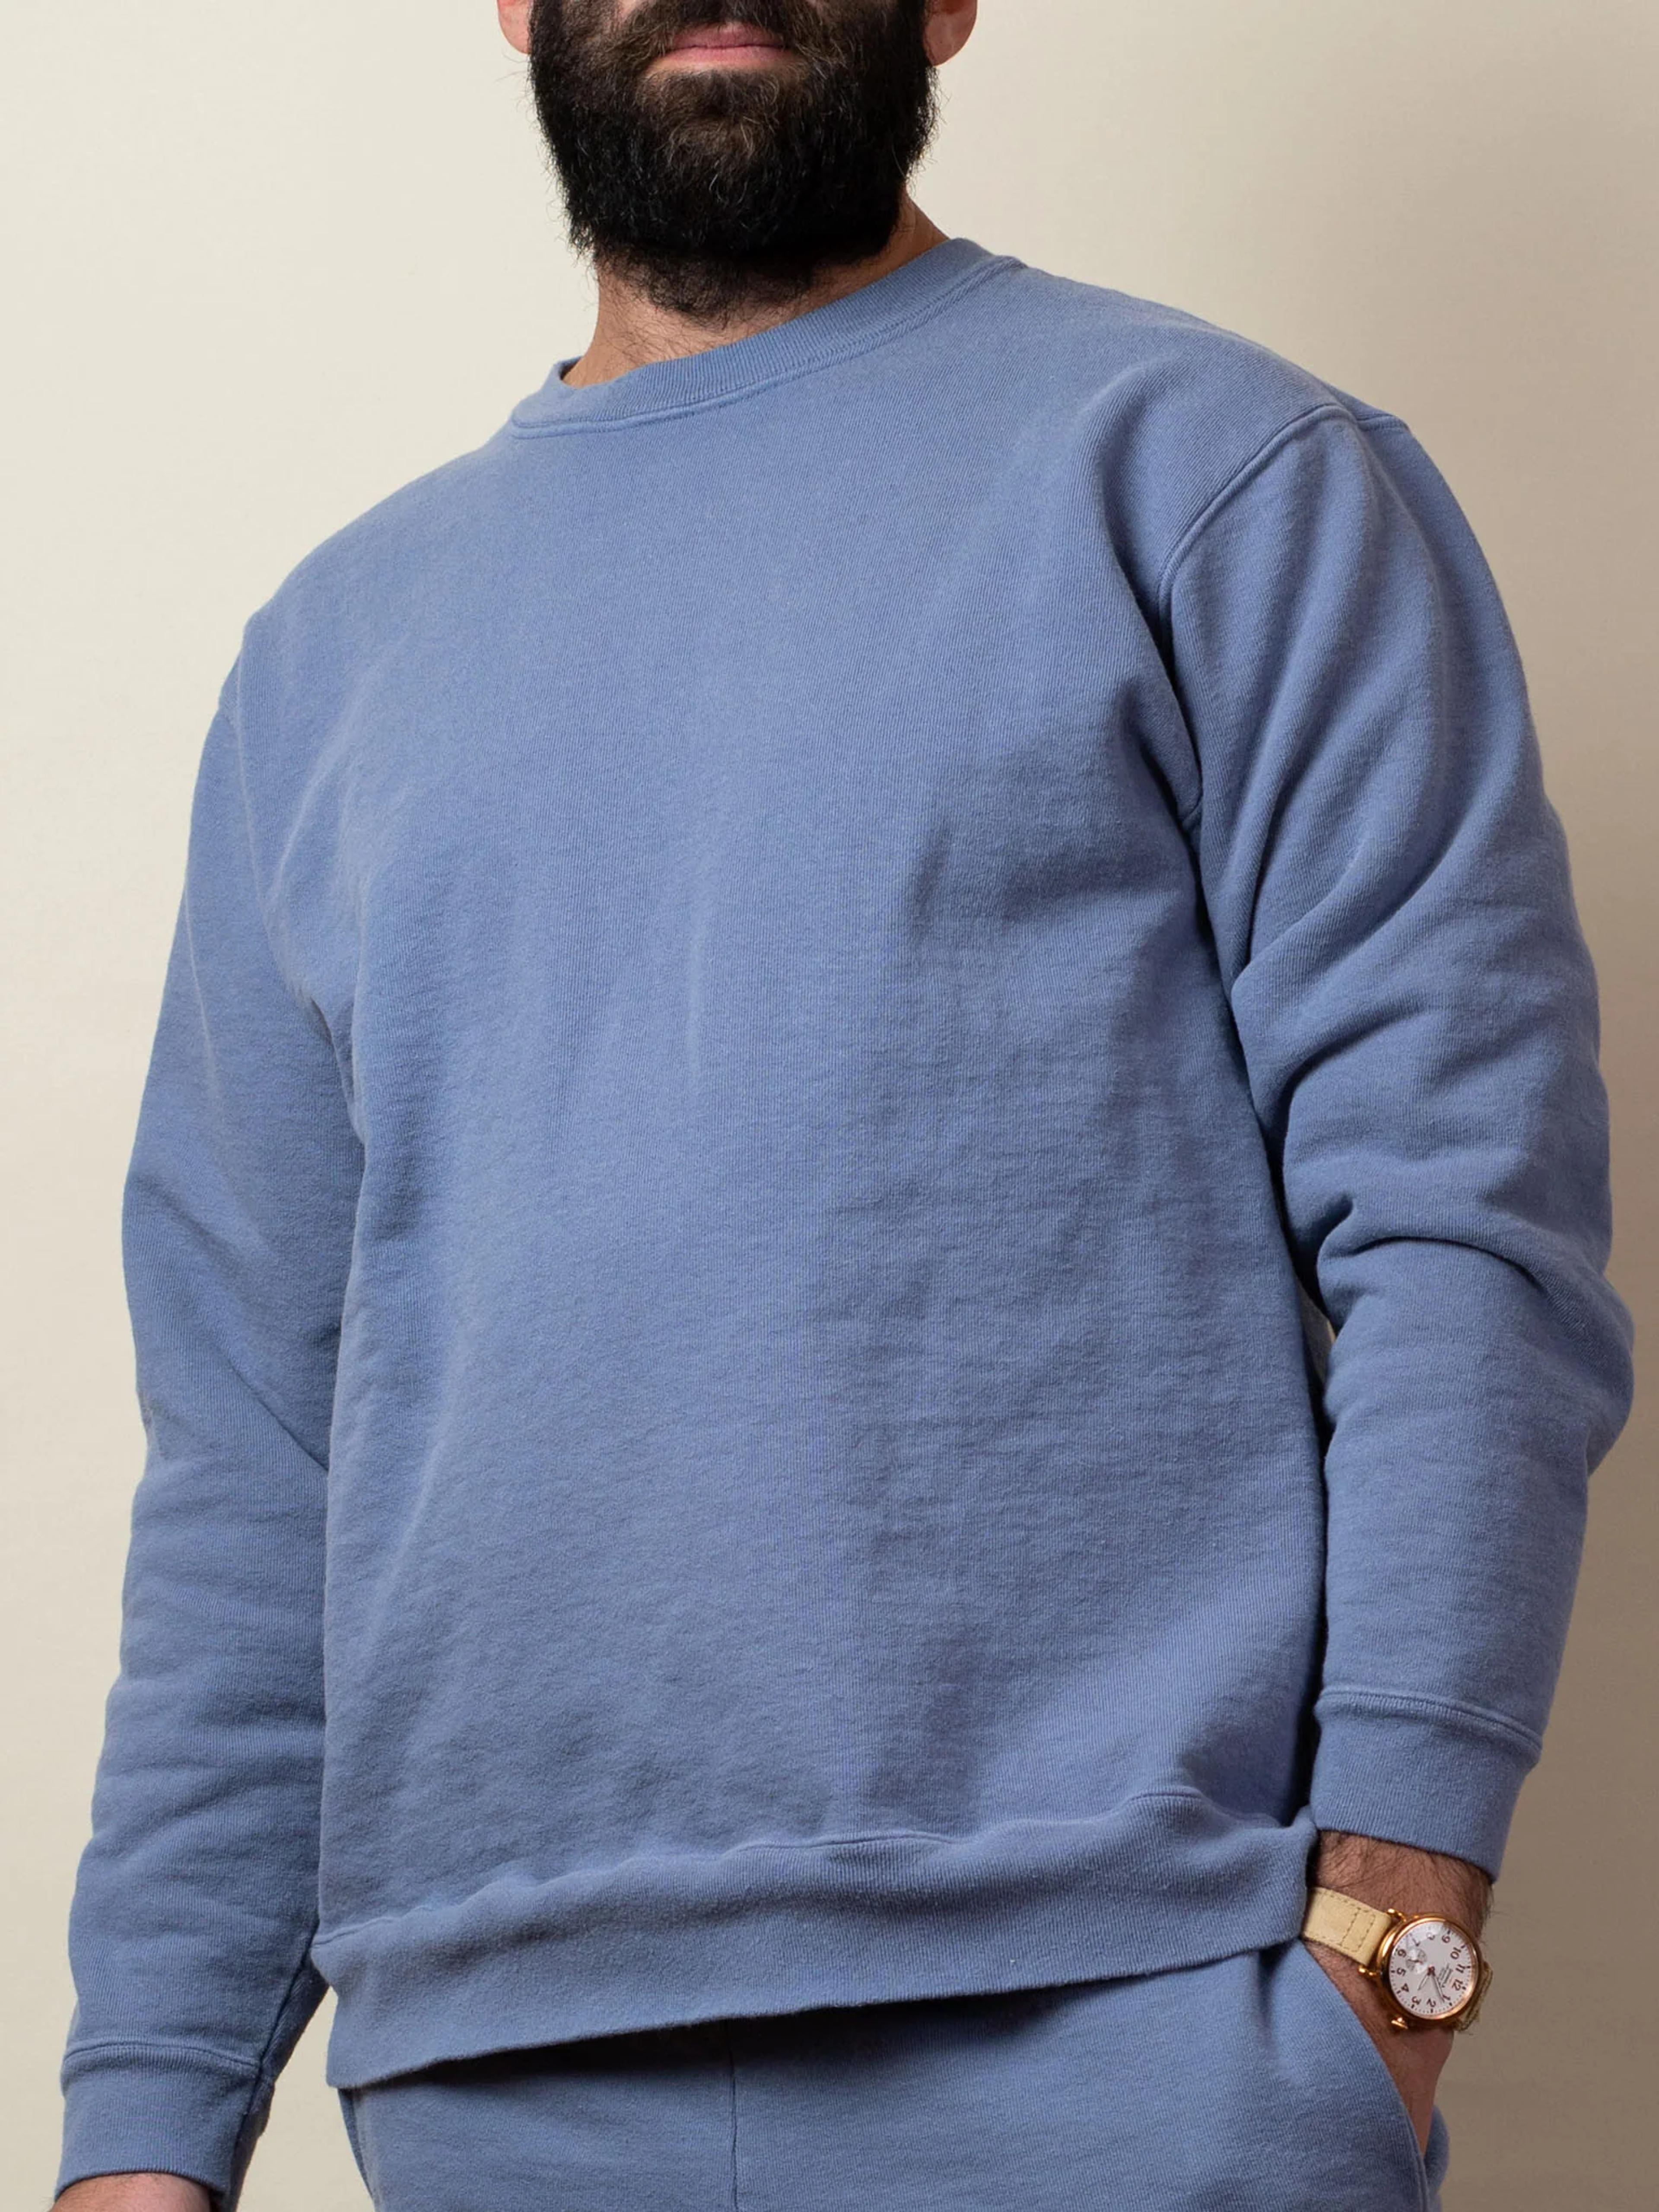 Goodwear Adult Cotton Fleece Crew Neck Sweatshirt Made In USA – Goodwear USA